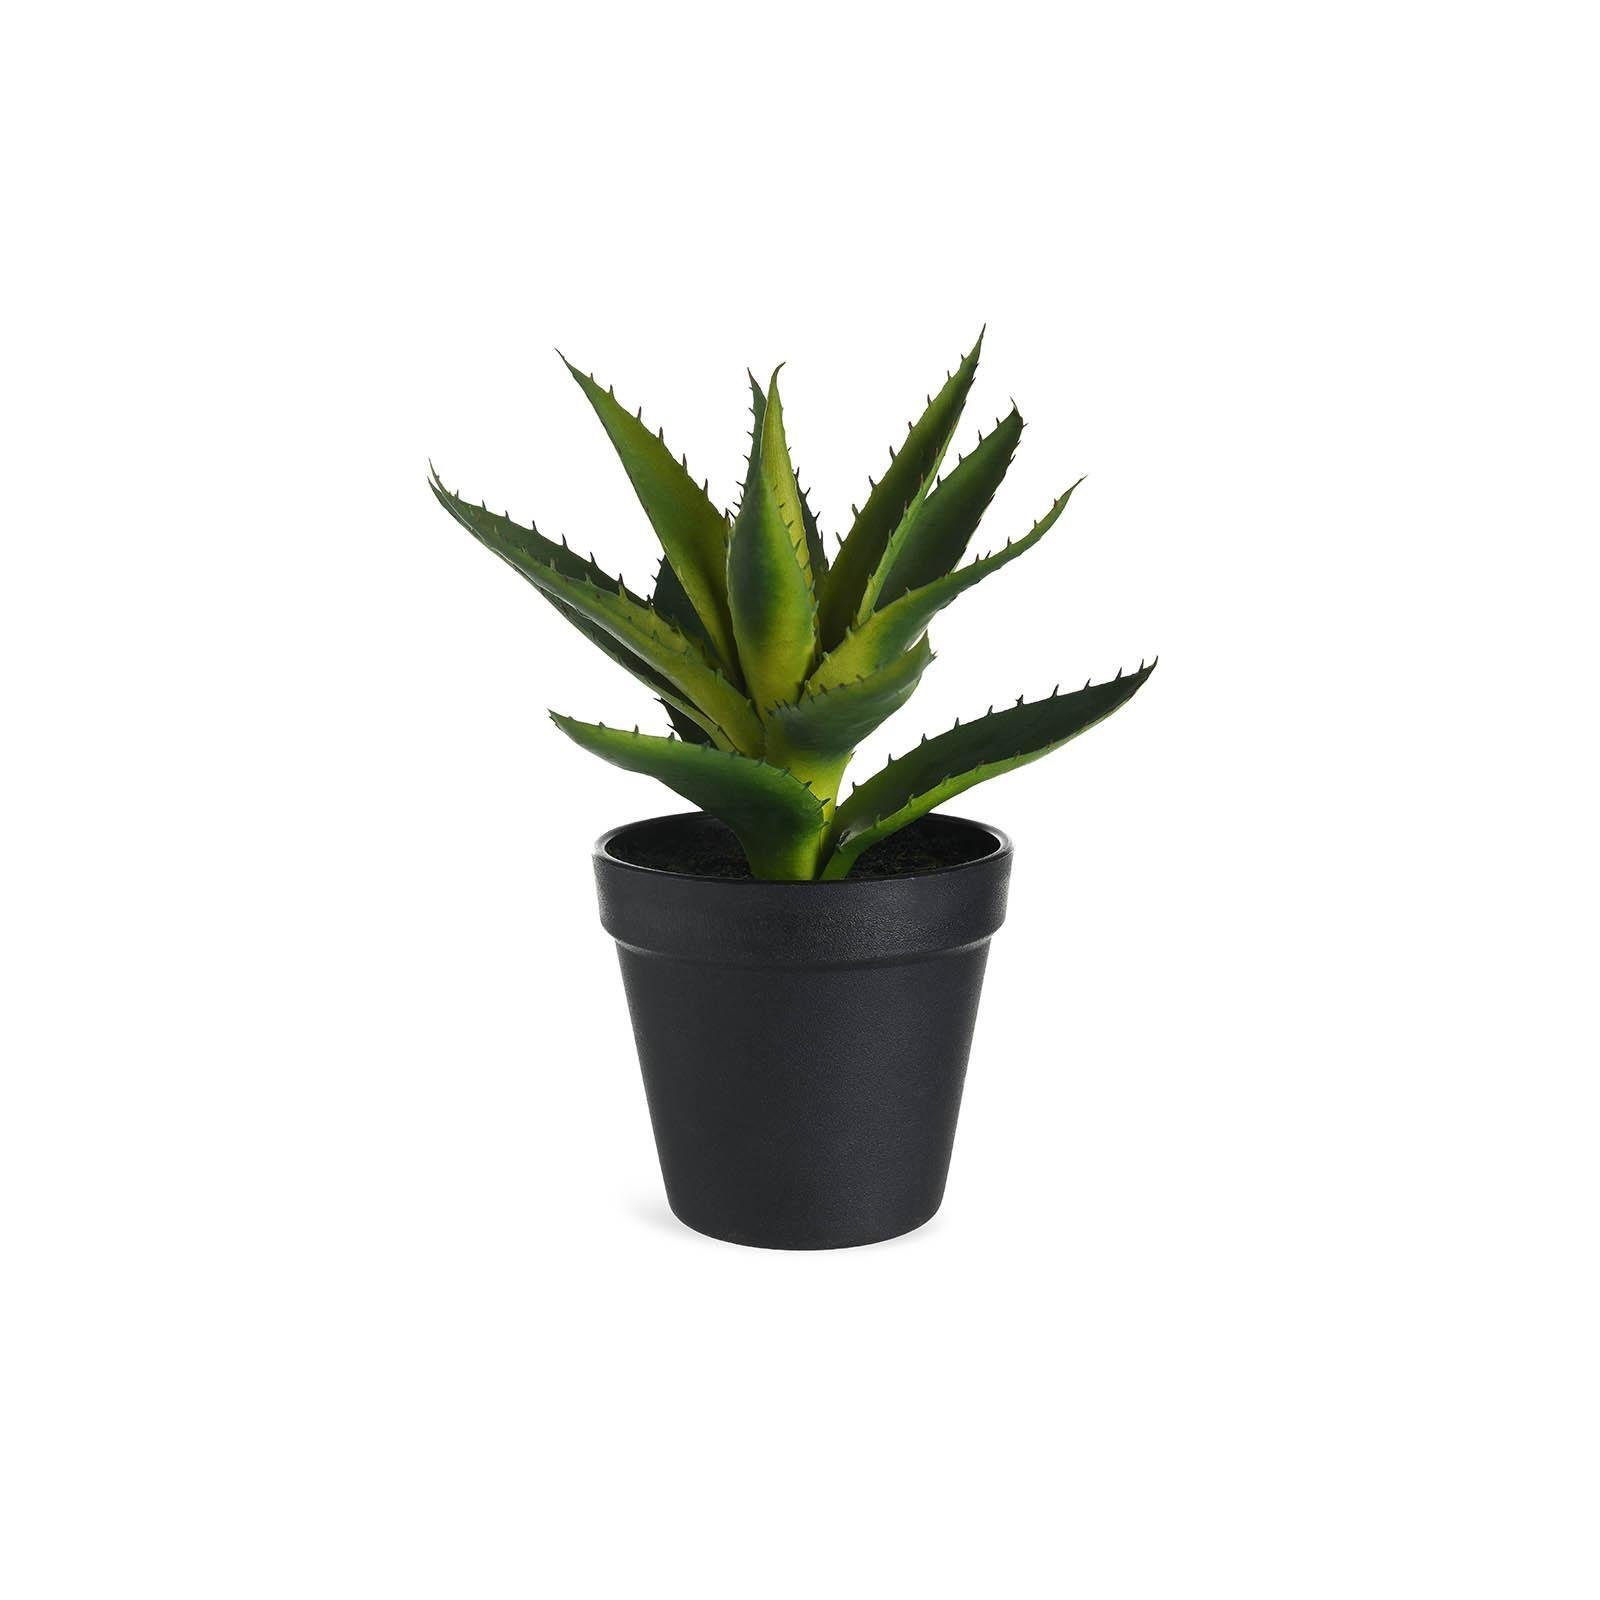 Kunstblume Kunstpflanze im Topf Aloe Vera Aloe Vera, Depot, Höhe 20 cm, aus Polyethylen, Schaumstoff, Draht, H 20 Zentimeter